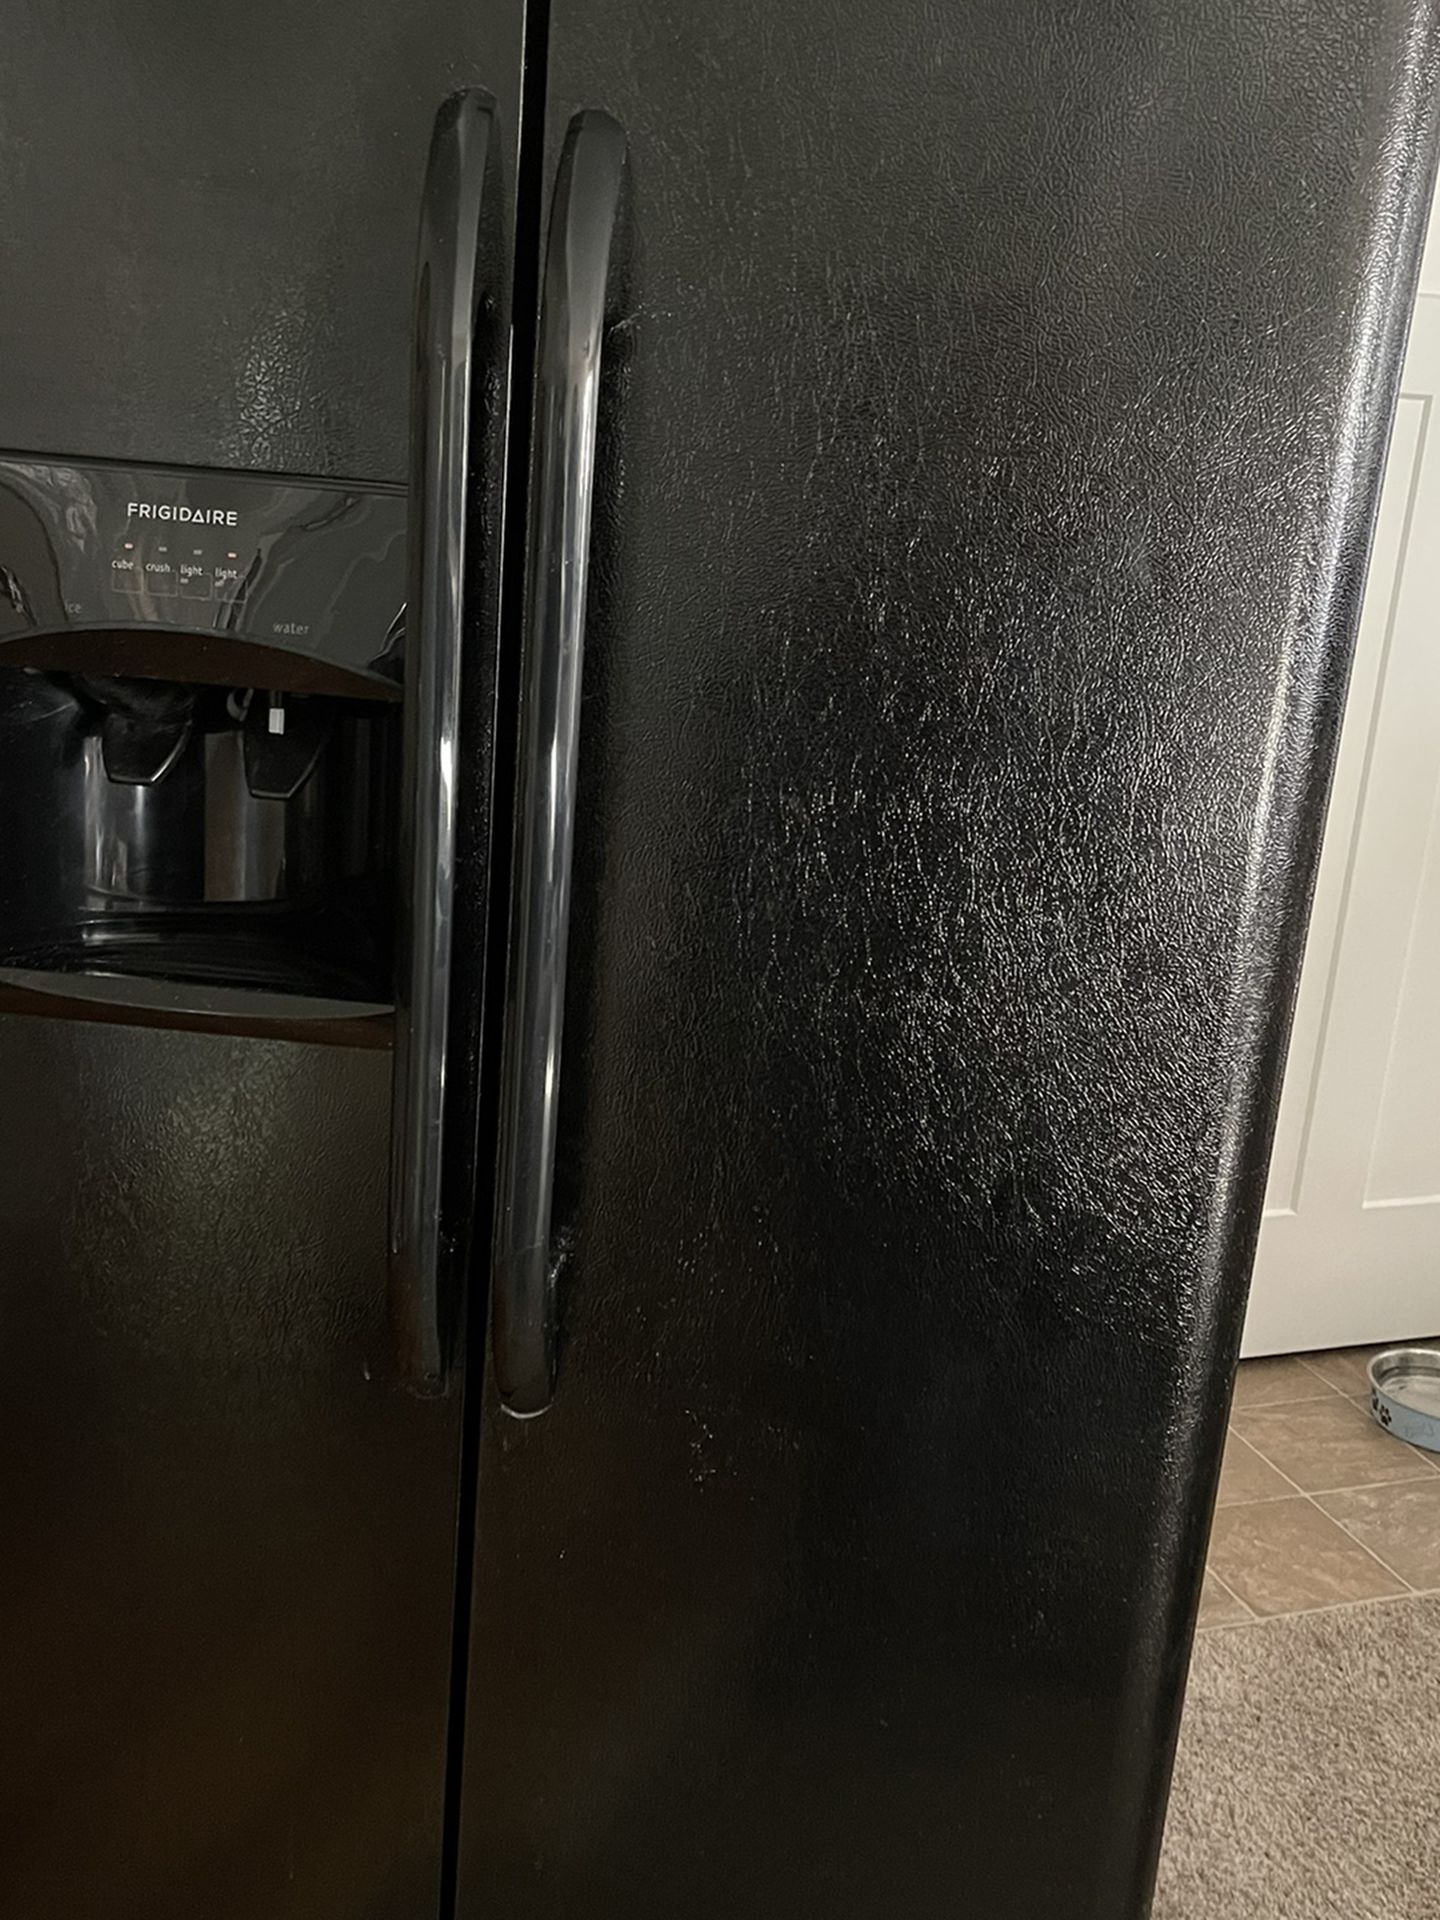 Like New Frigidaire Side By Side Refrigerator /freezer. Works Great . $300, Firm